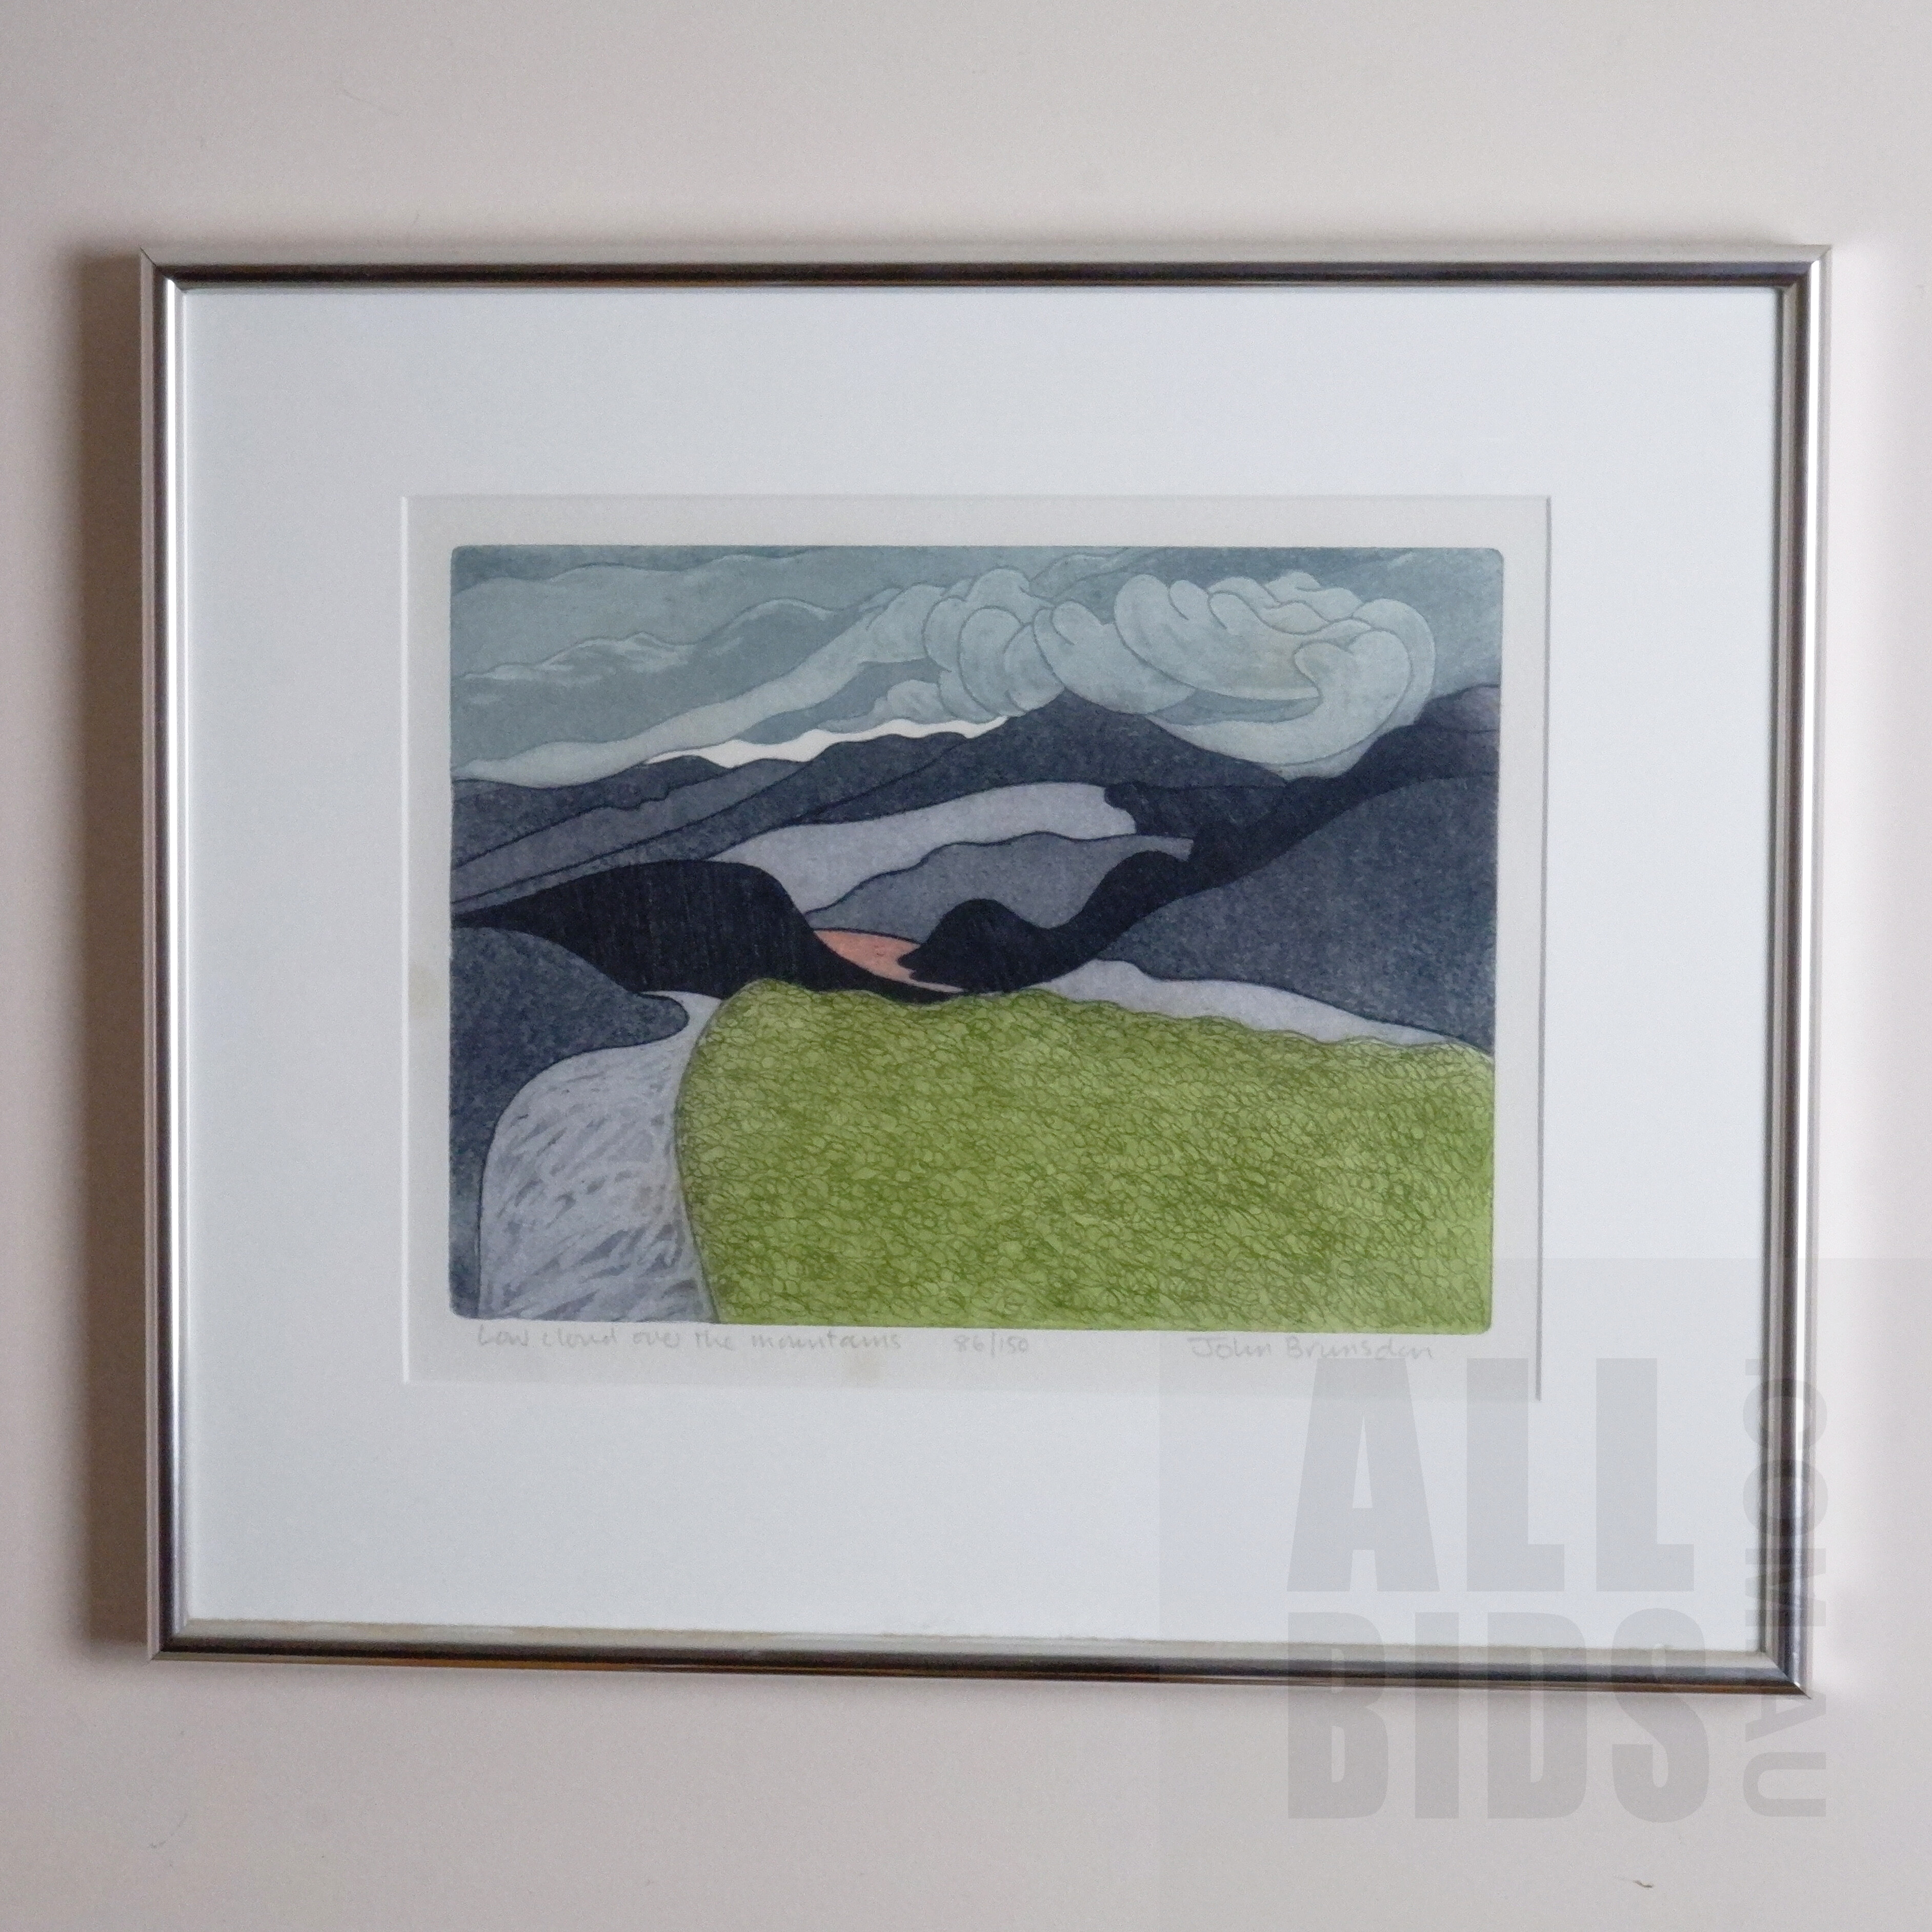 'John Brunsden (1933-2014, British), Low Cloud Over the Mountains, Etching & Aquatint, 22.5 x 30 cm (image size)'